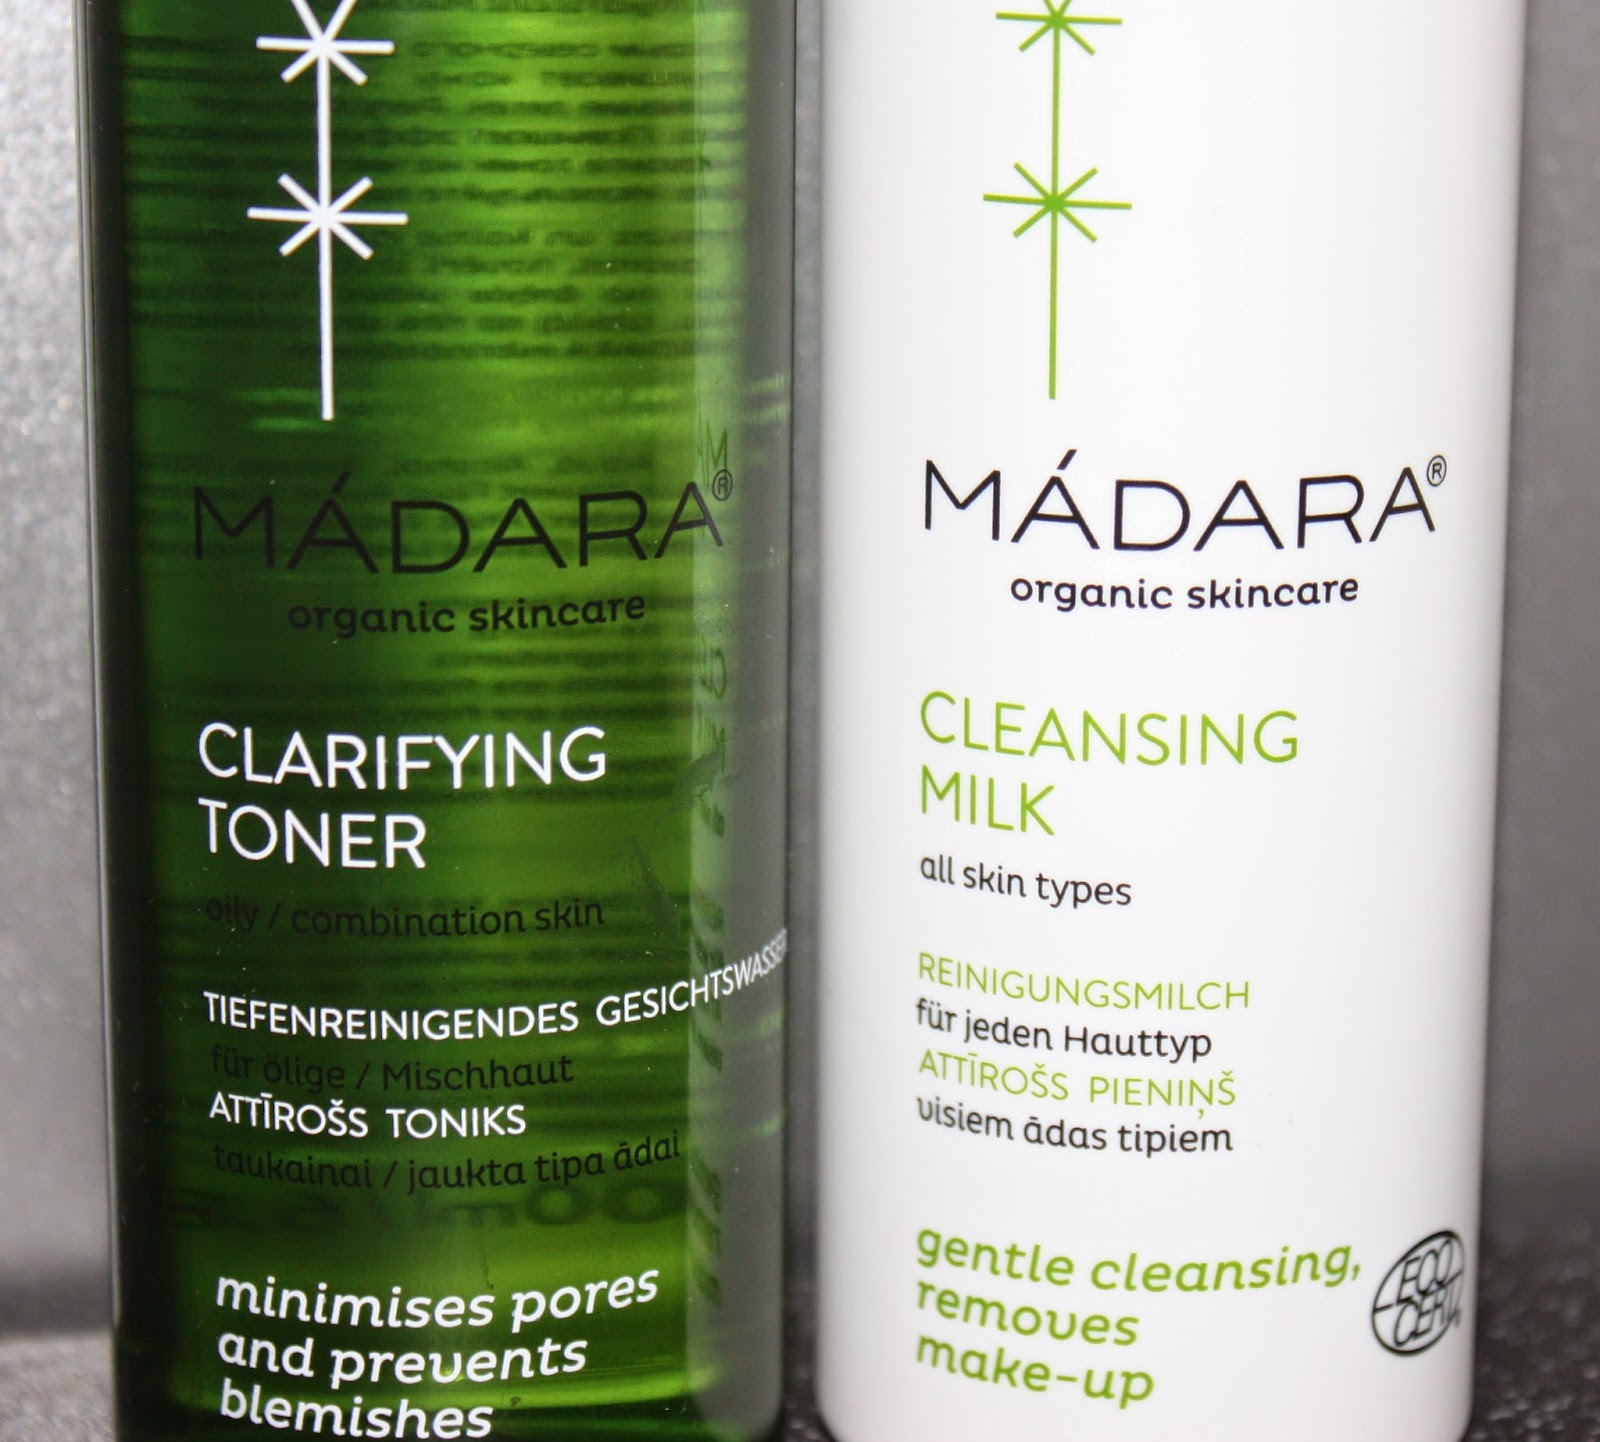 Madara Clarifying Toner and Madara Cleansing Milk